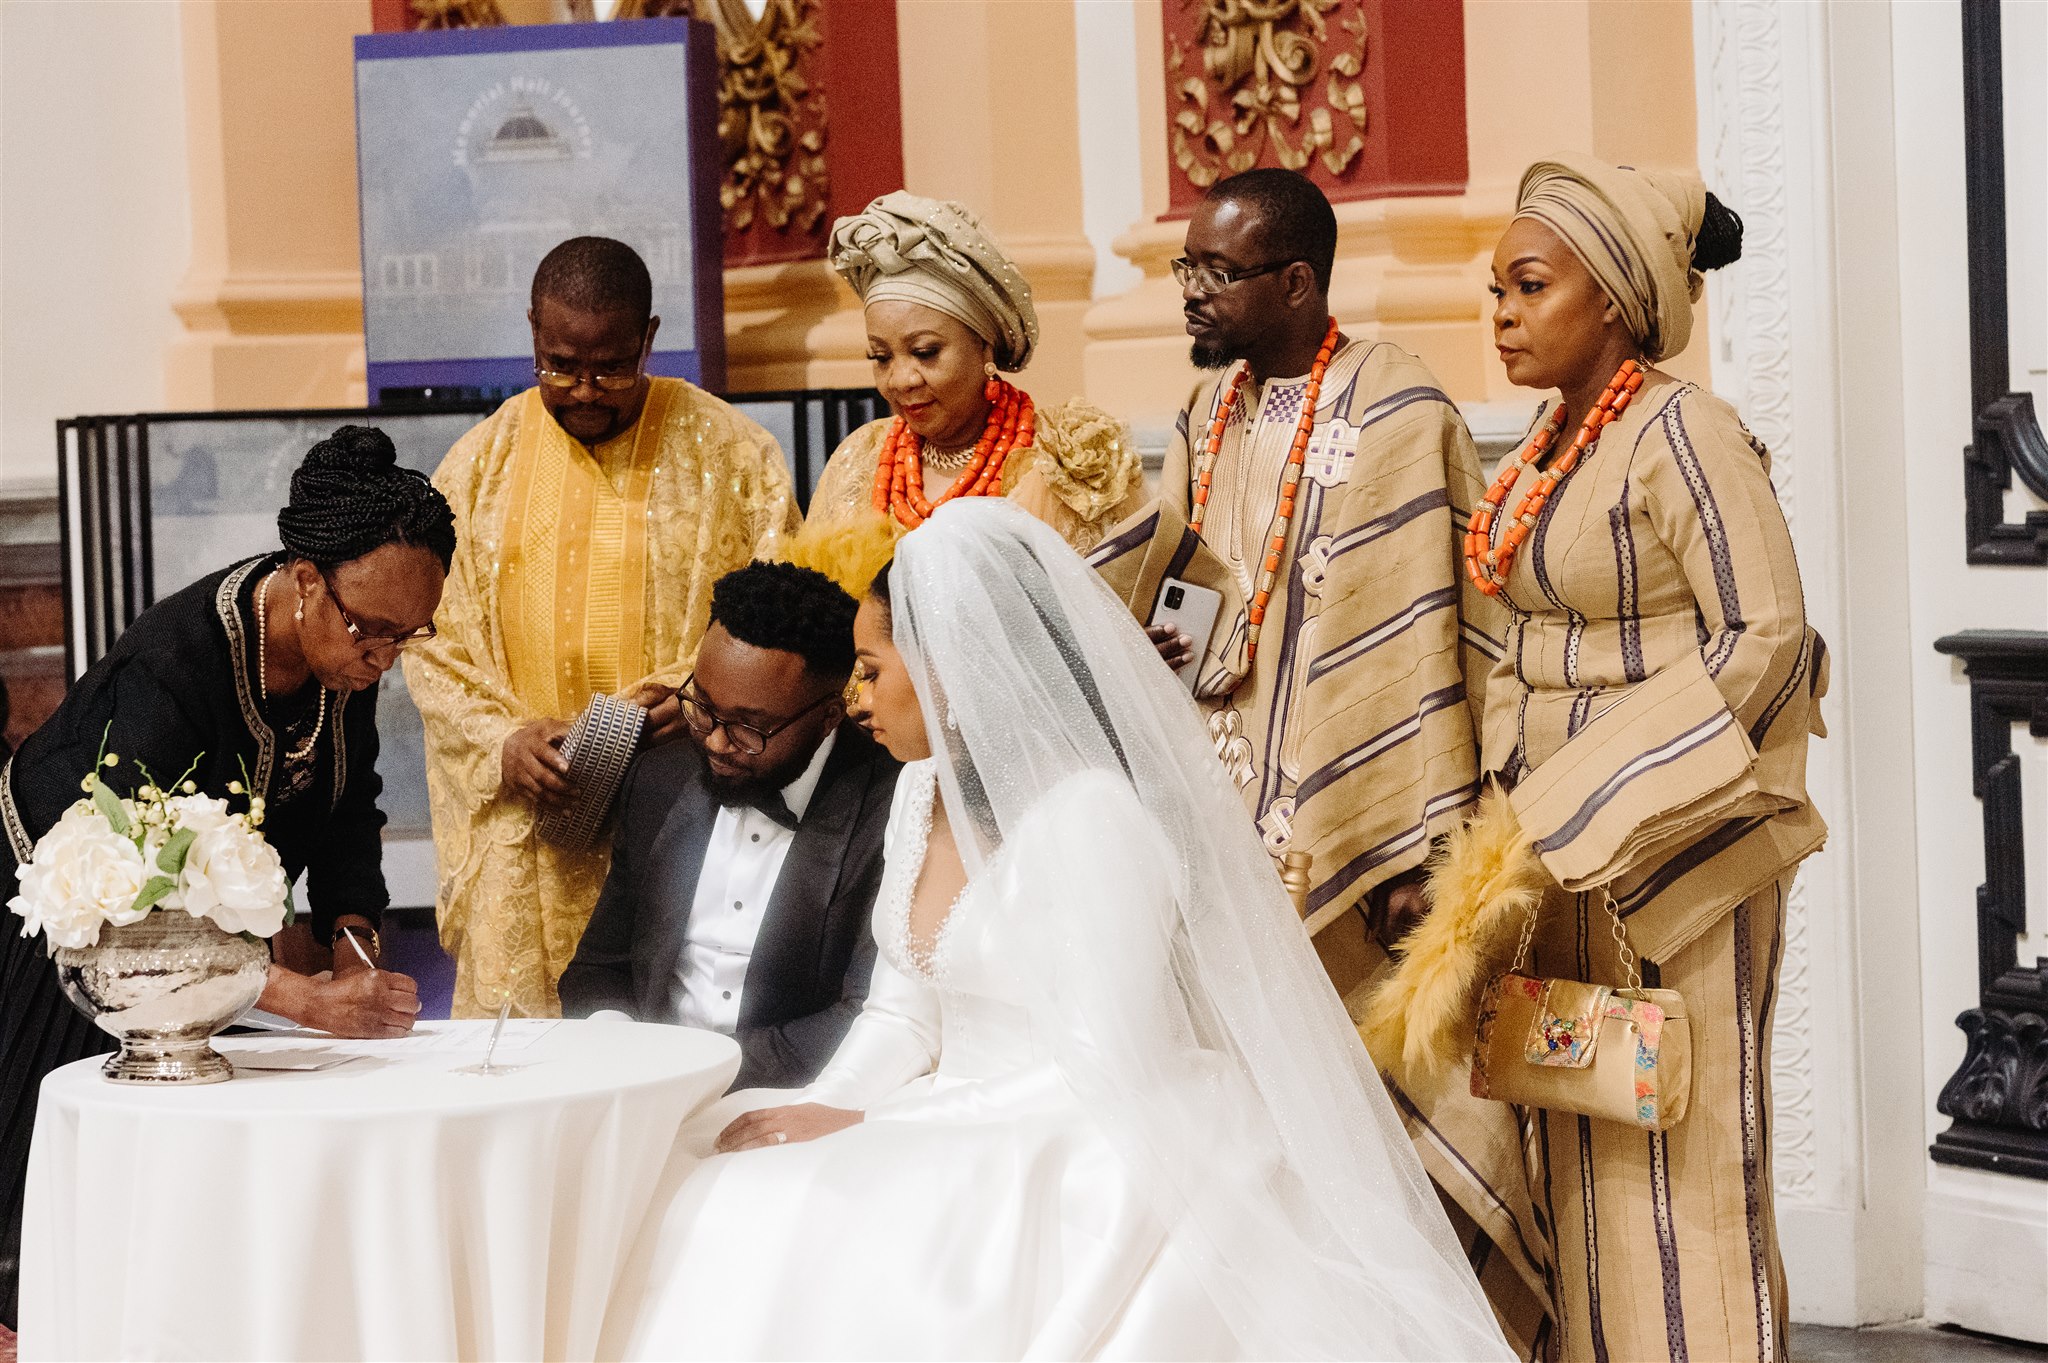 nigerian wedding in please touch museum 